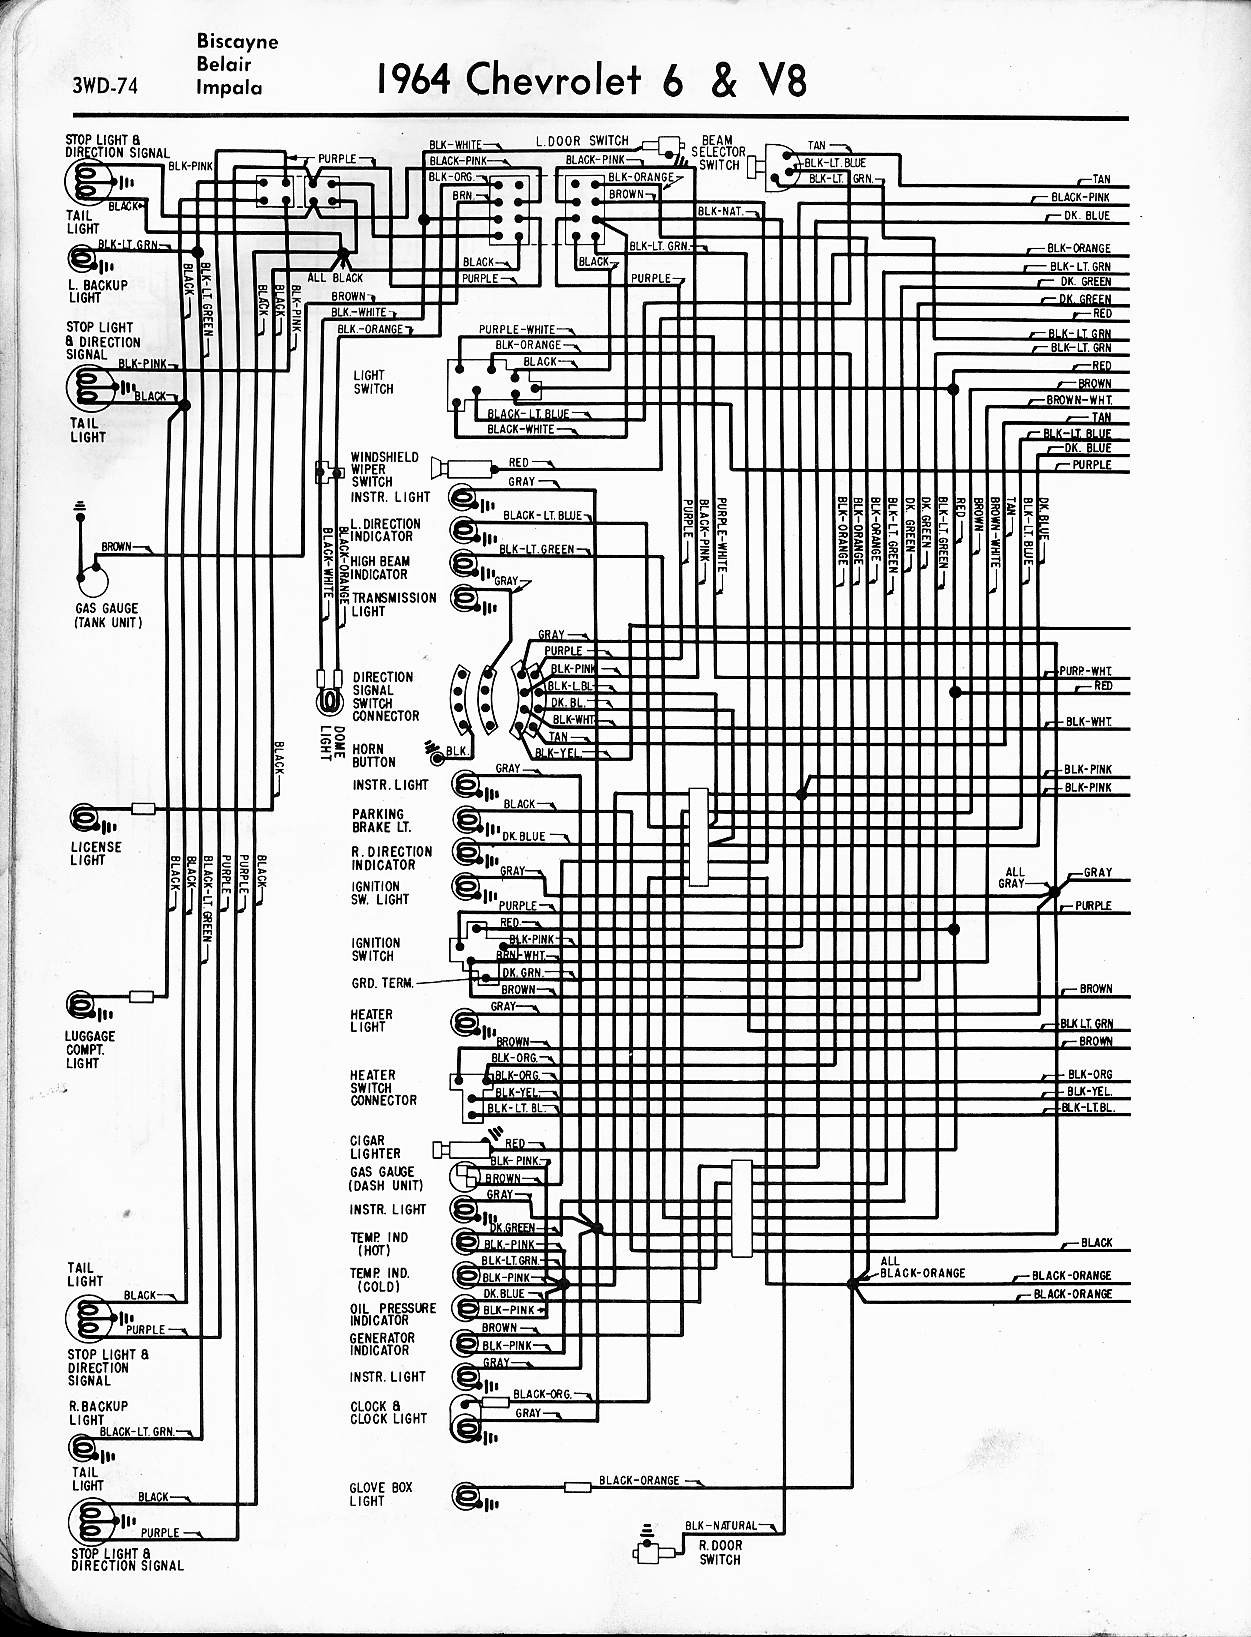 2001 Chevy Impala Engine Diagram 57 65 Chevy Wiring Diagrams Of 2001 Chevy Impala Engine Diagram